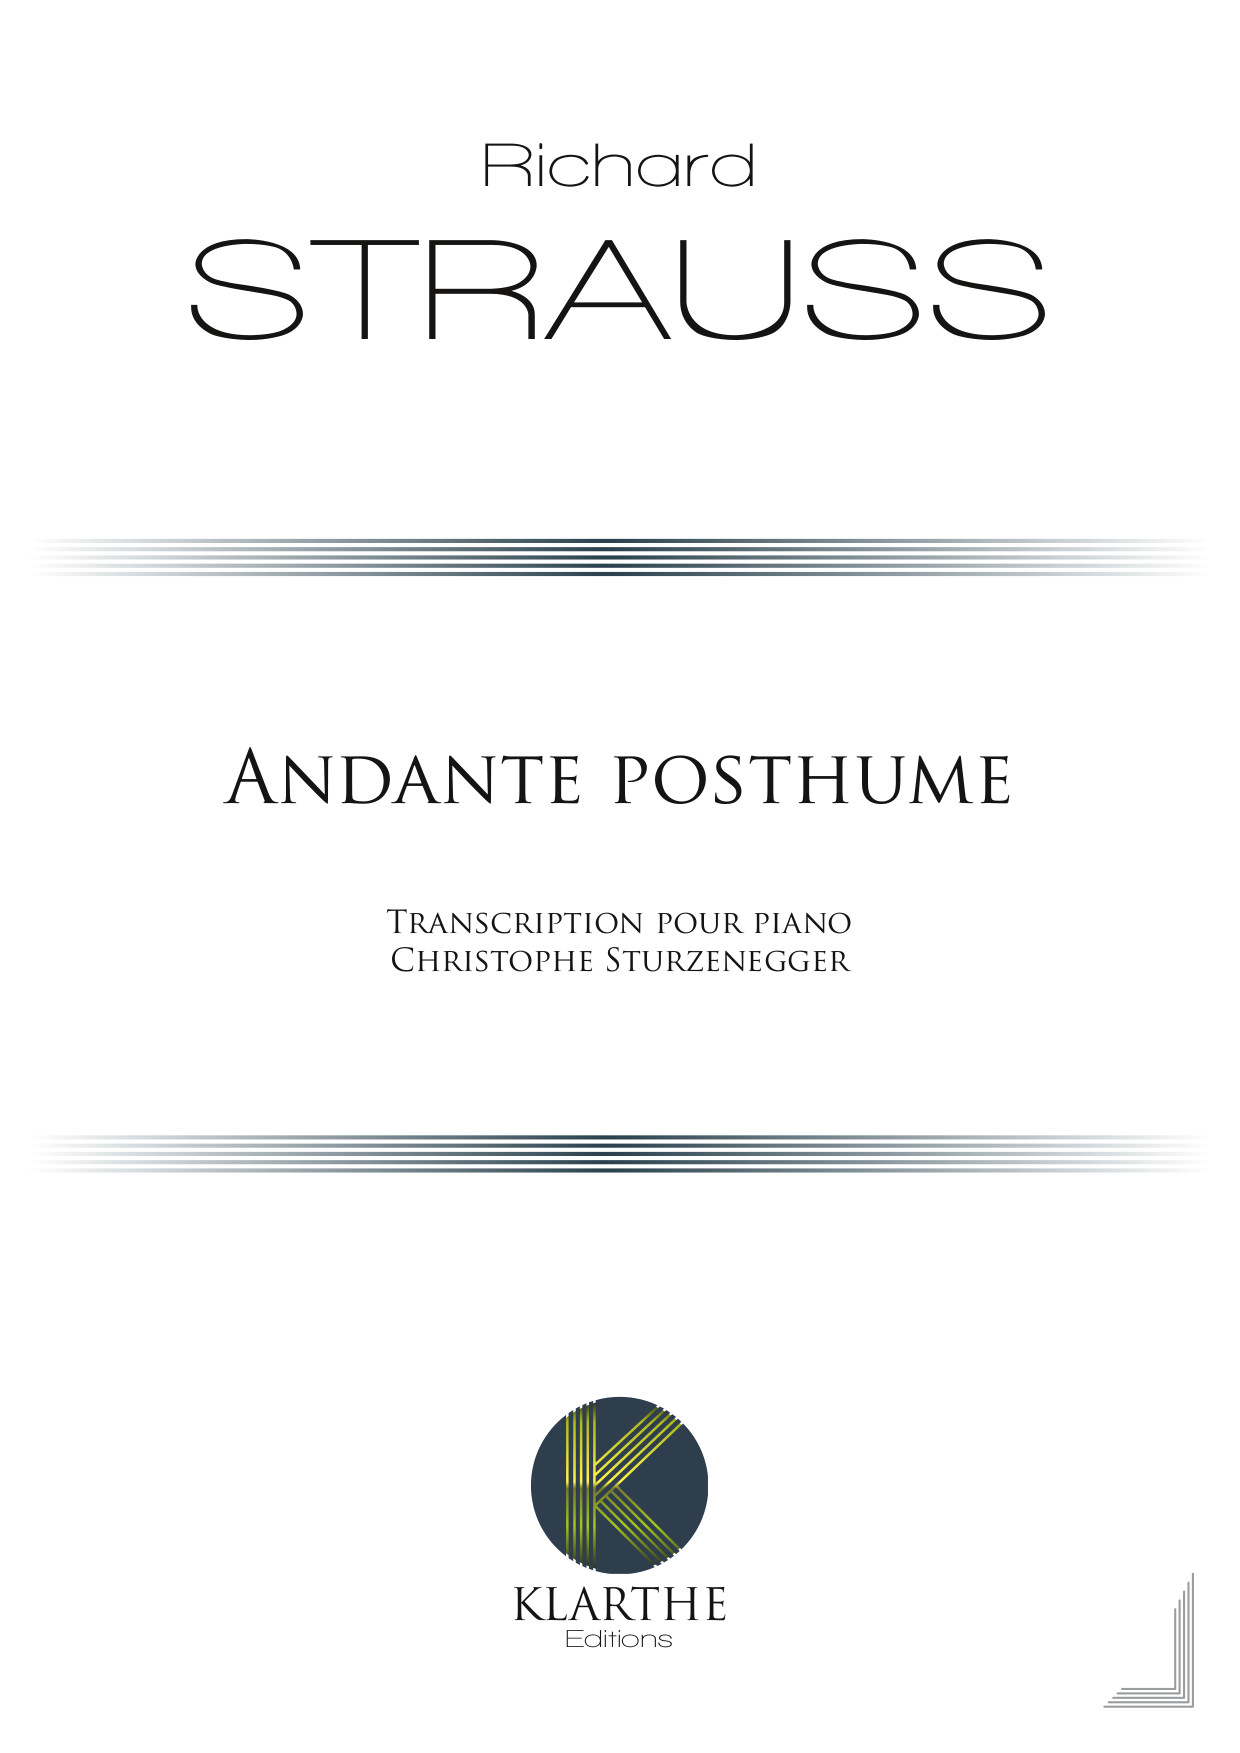 Andante posthume (STRAUSS RICHARD)